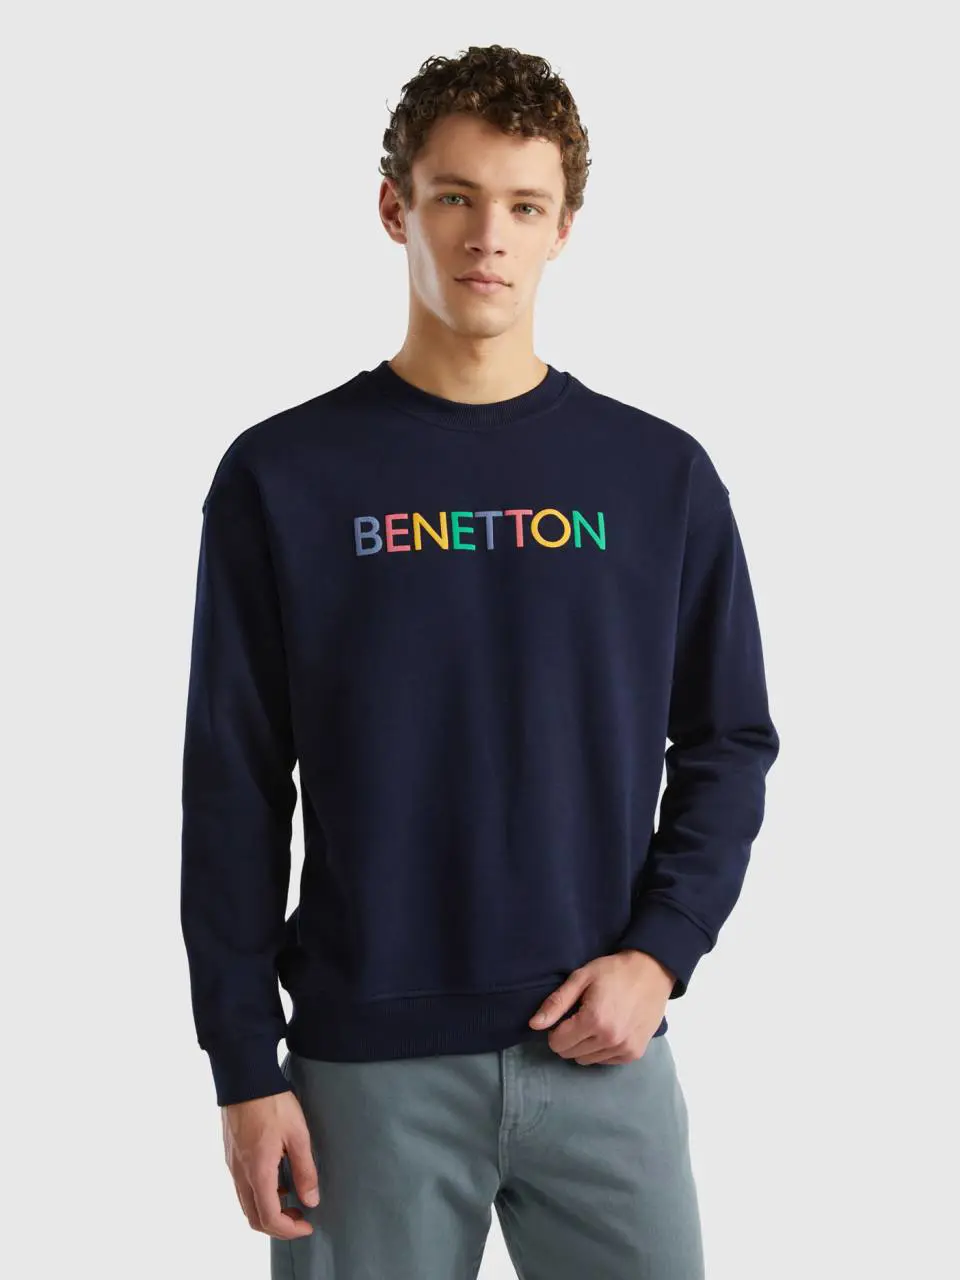 Benetton crew neck sweatshirt with logo print. 1